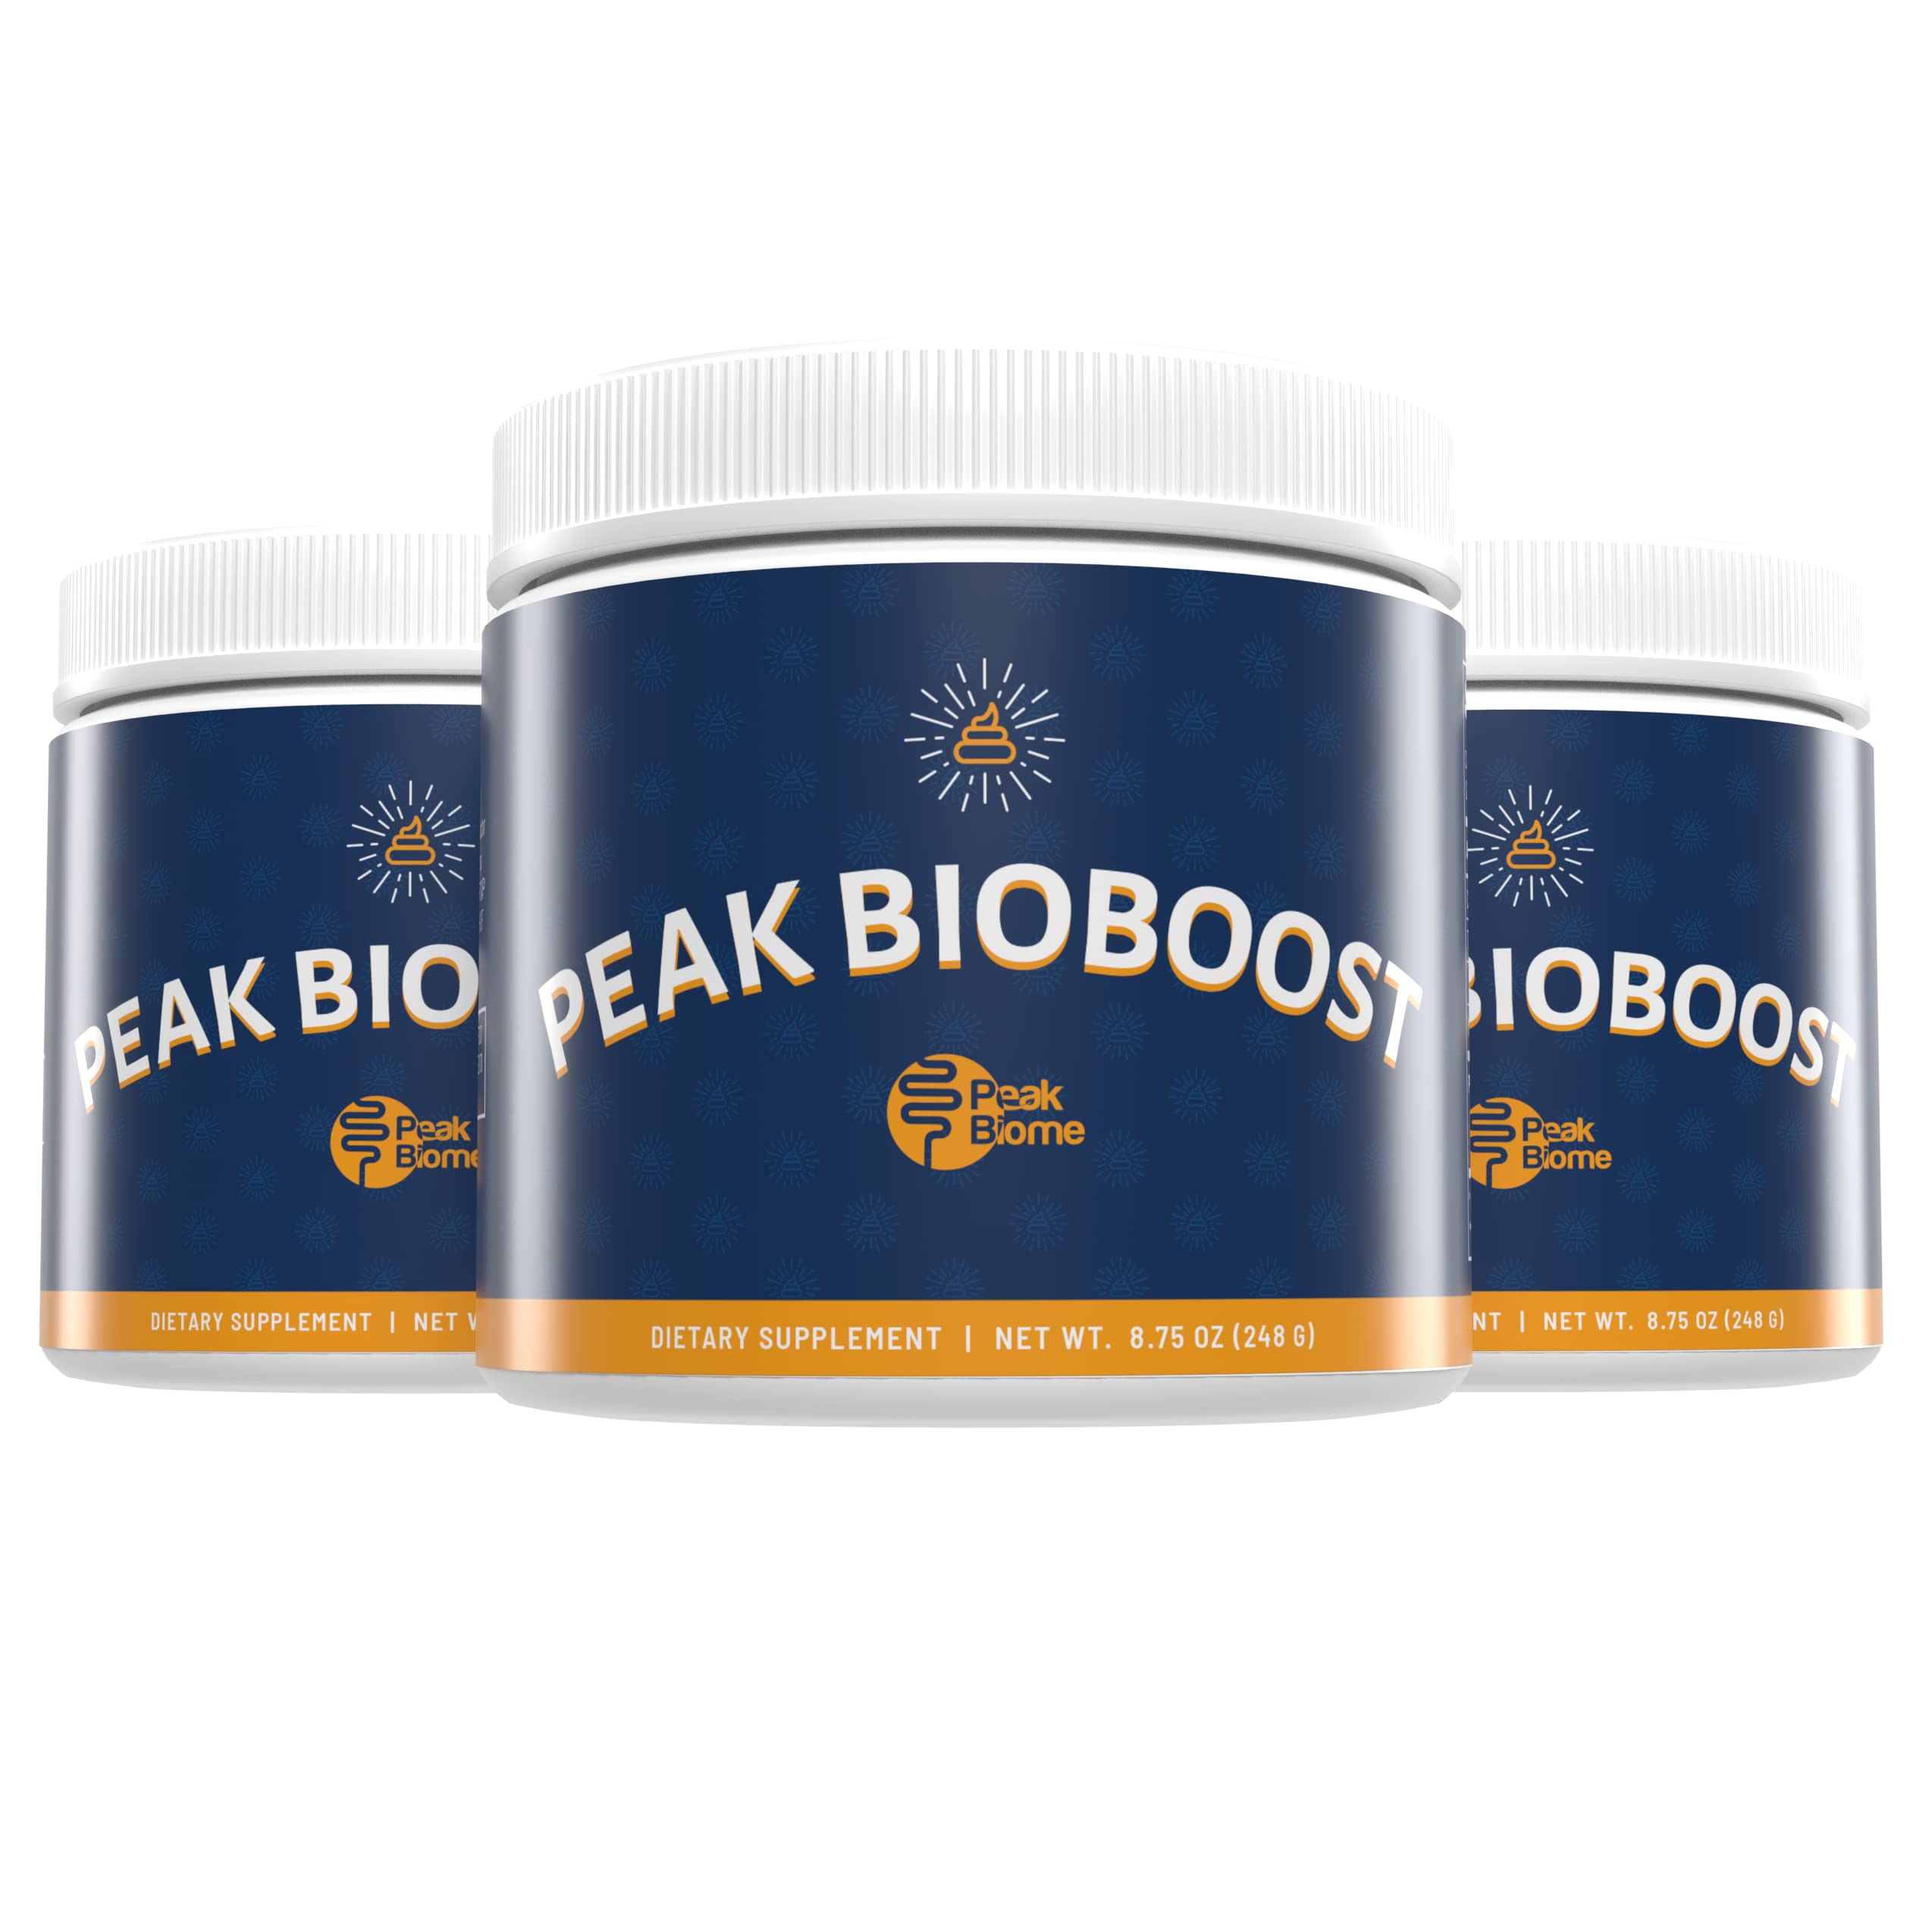 how to use peak bioboost